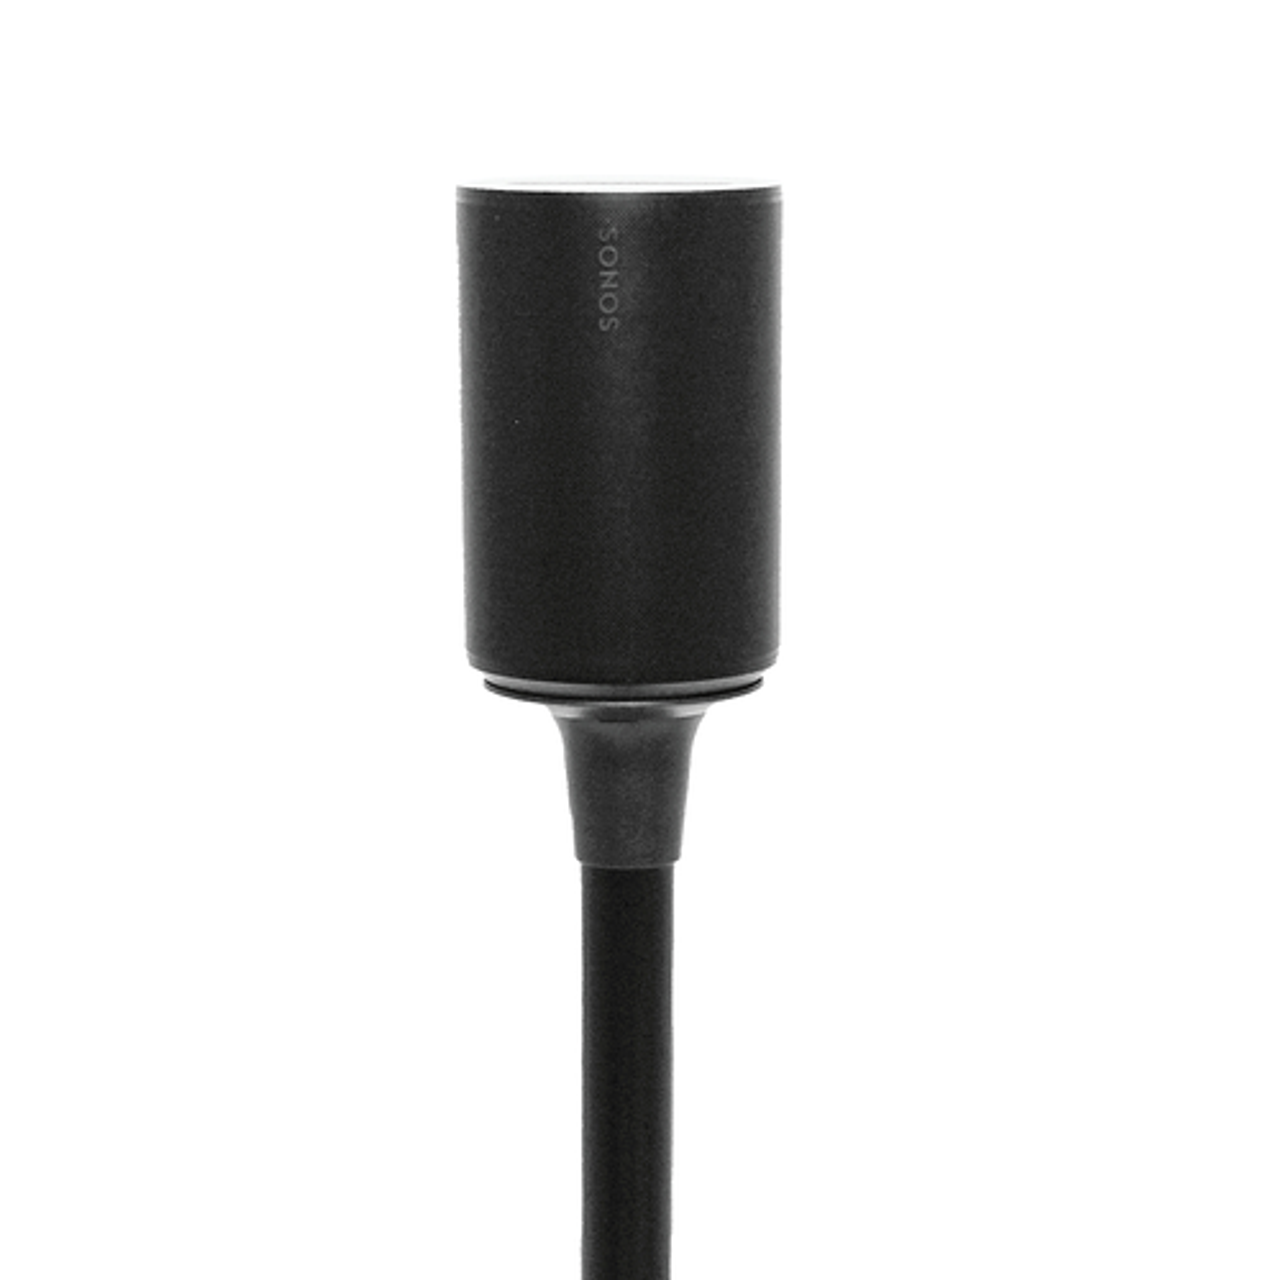 Sanus Wireless Speaker Stands for Sonos Era 100™  (Pair) - Black